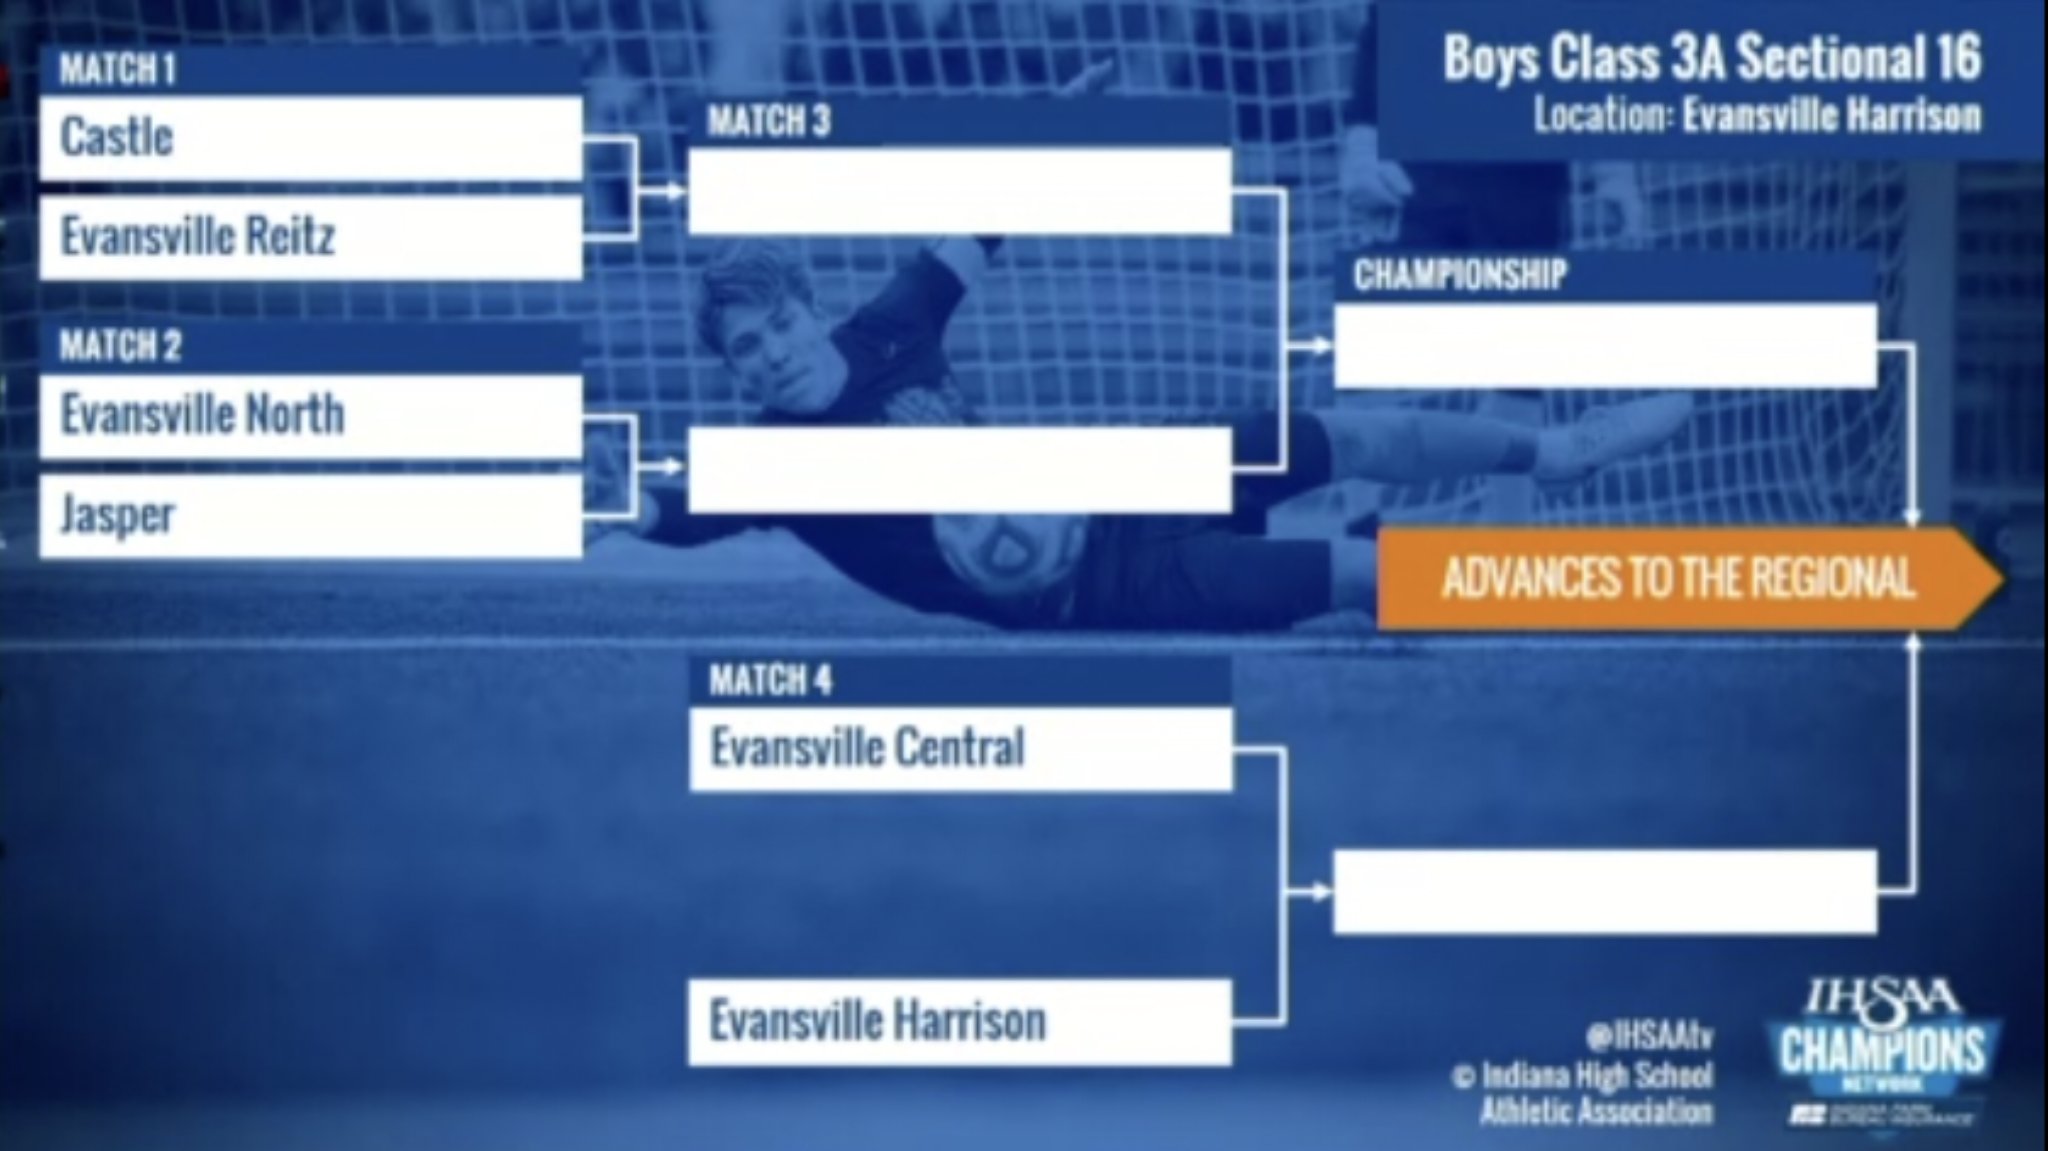 3A Boys Soccer Sectional Championship: Jasper Wildcats vs North Huskies